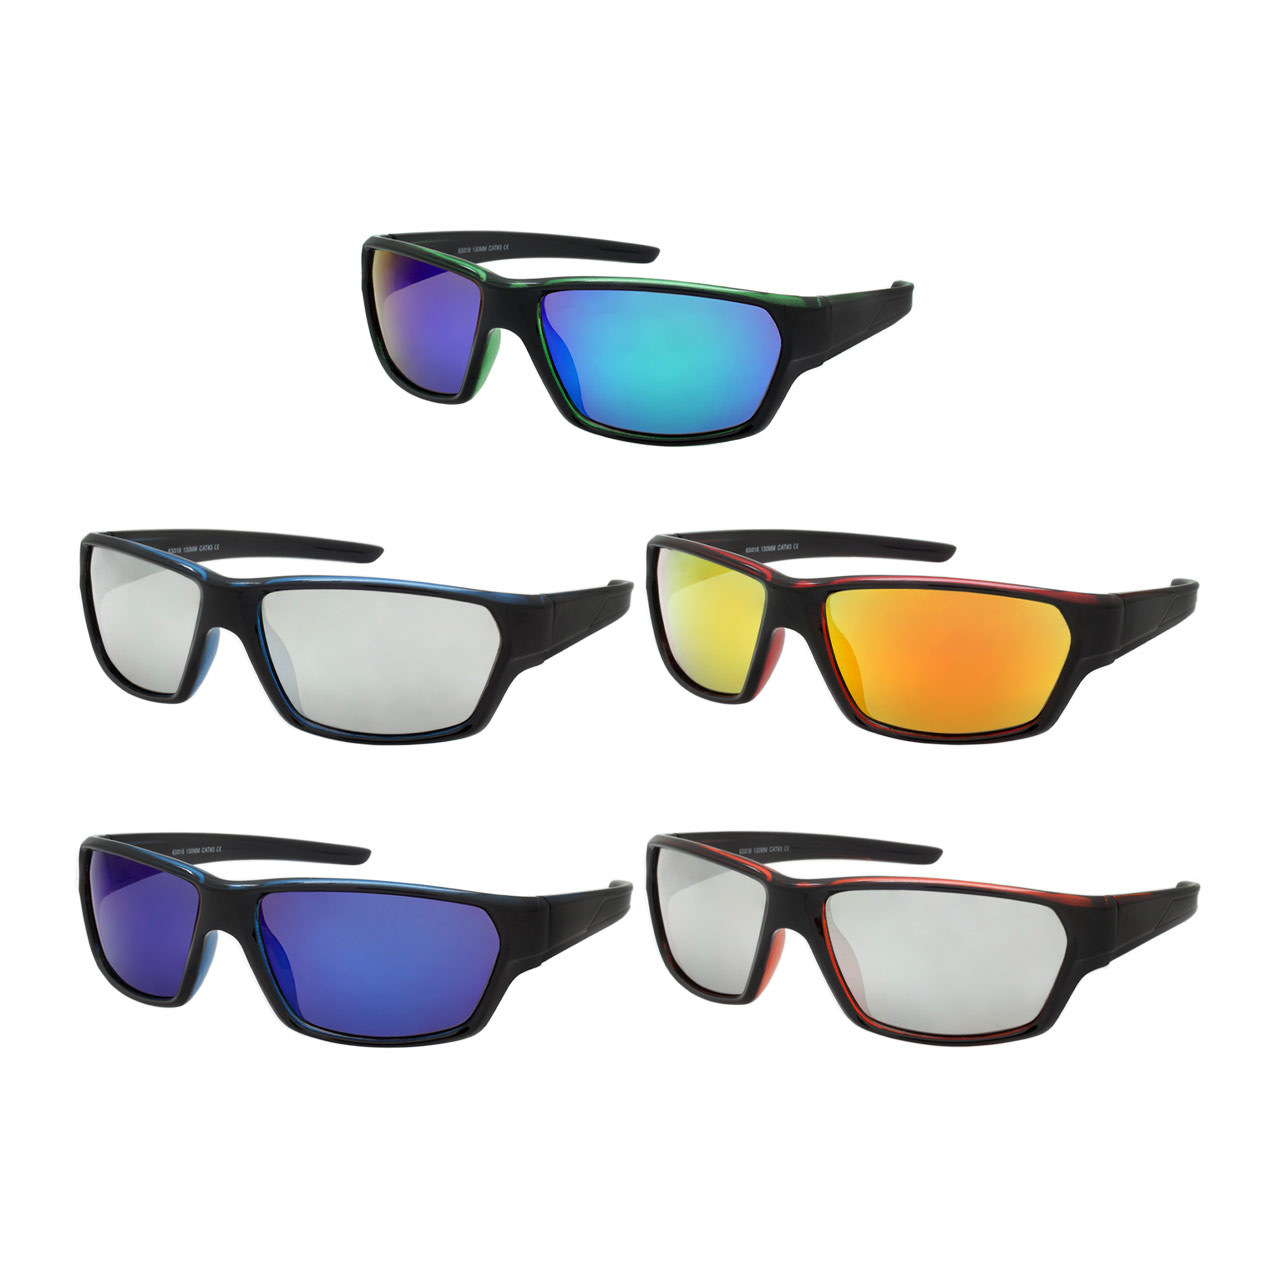 MENS SPORT SUNGLASSES WHOLESALE I ASSTD. 12 PCS I GY03 - Shark Eyes, Inc. - Wholesale  Sunglasses, Reading Glasses, & Displays